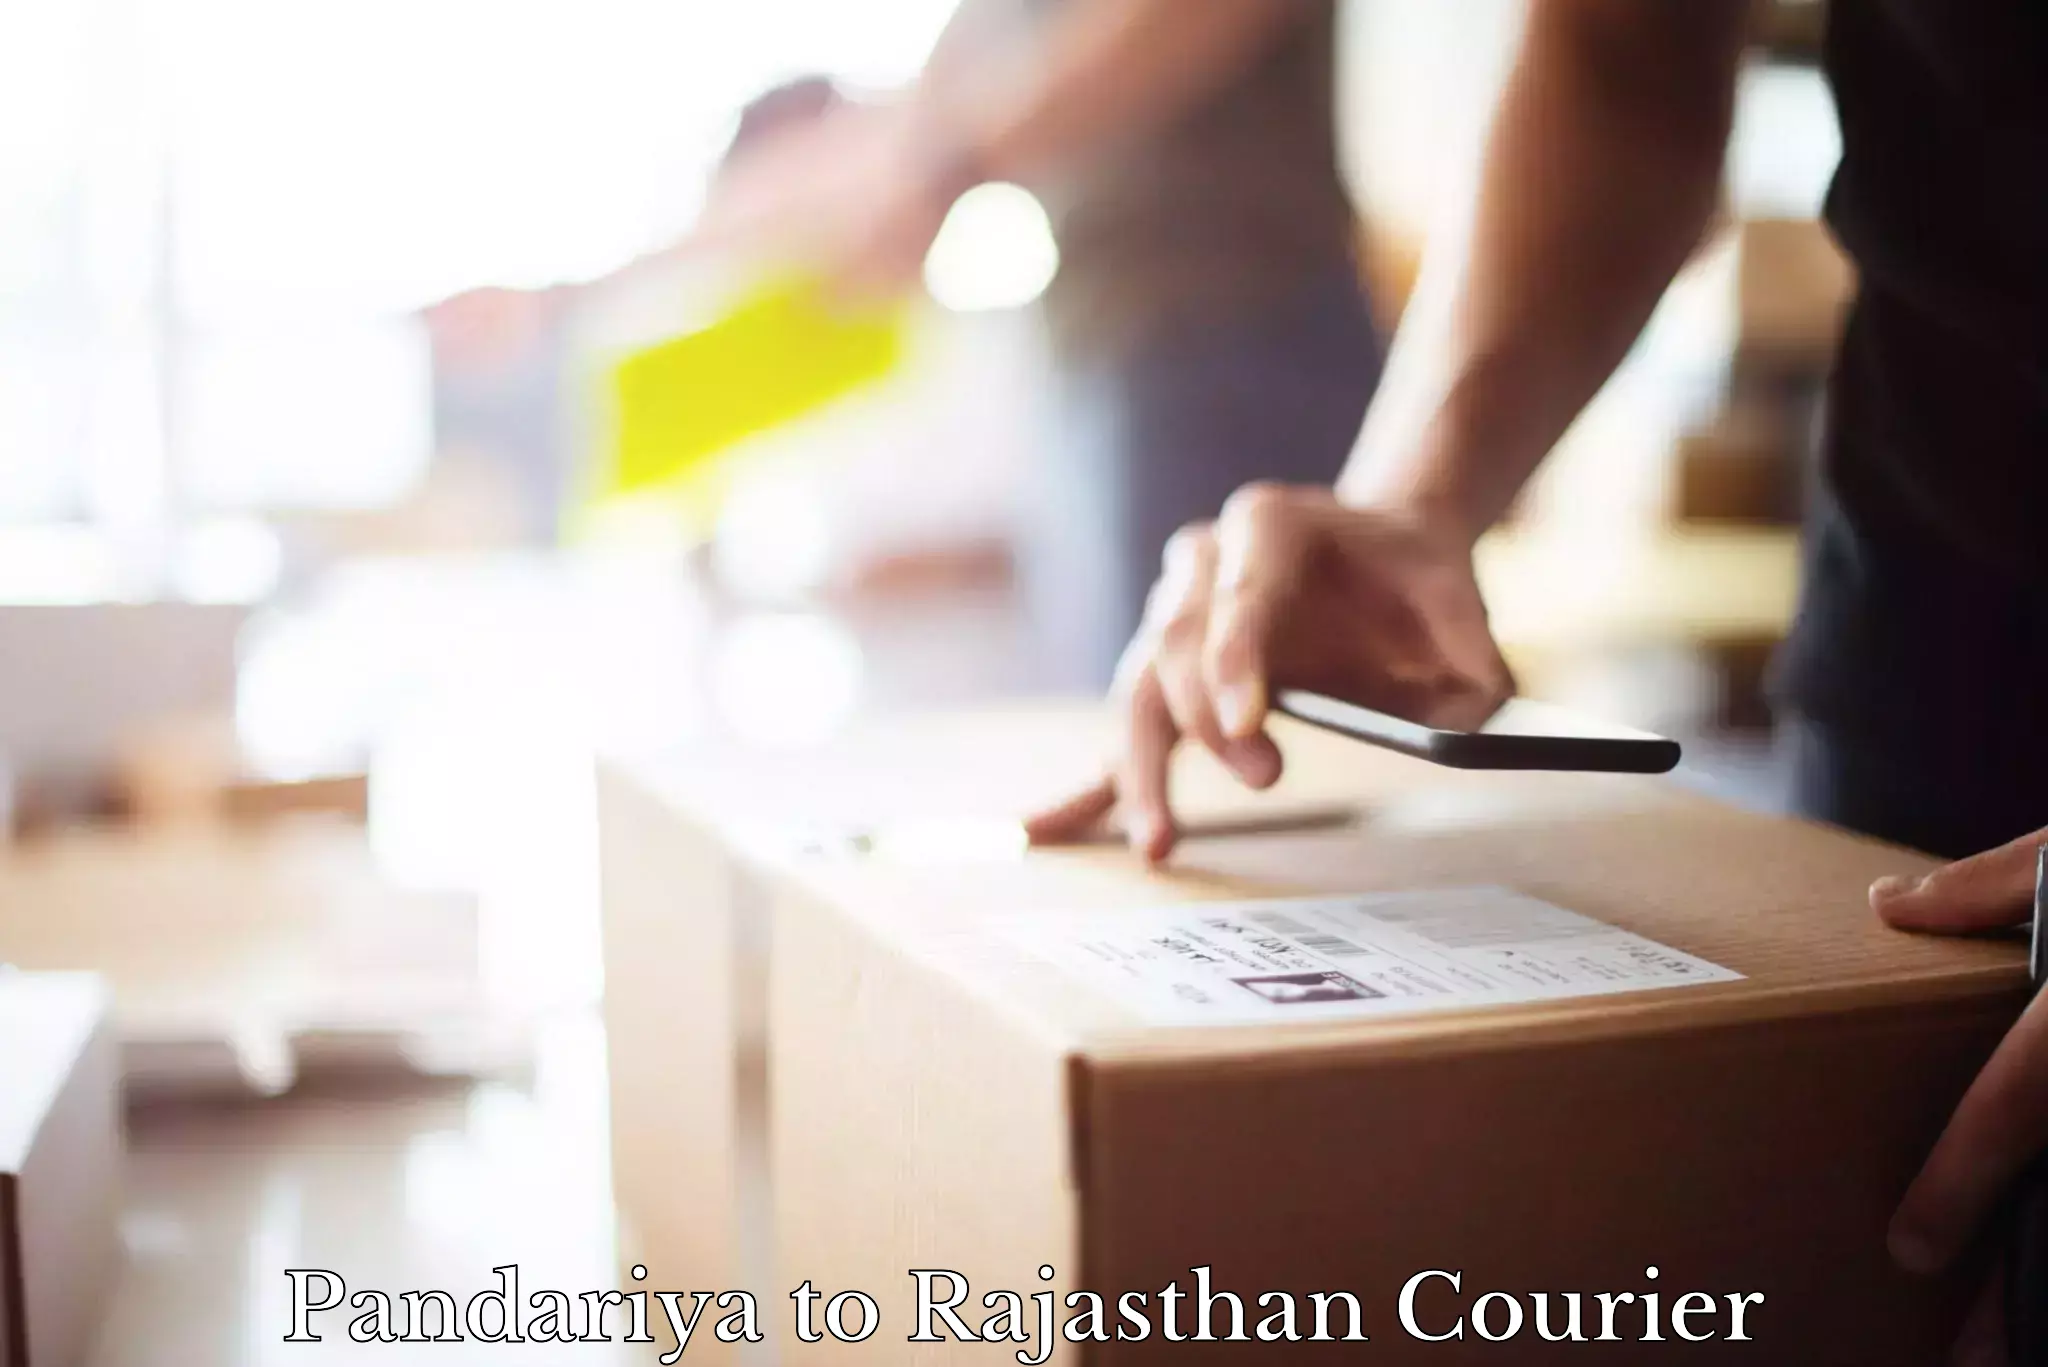 Courier service comparison Pandariya to Rajasthan